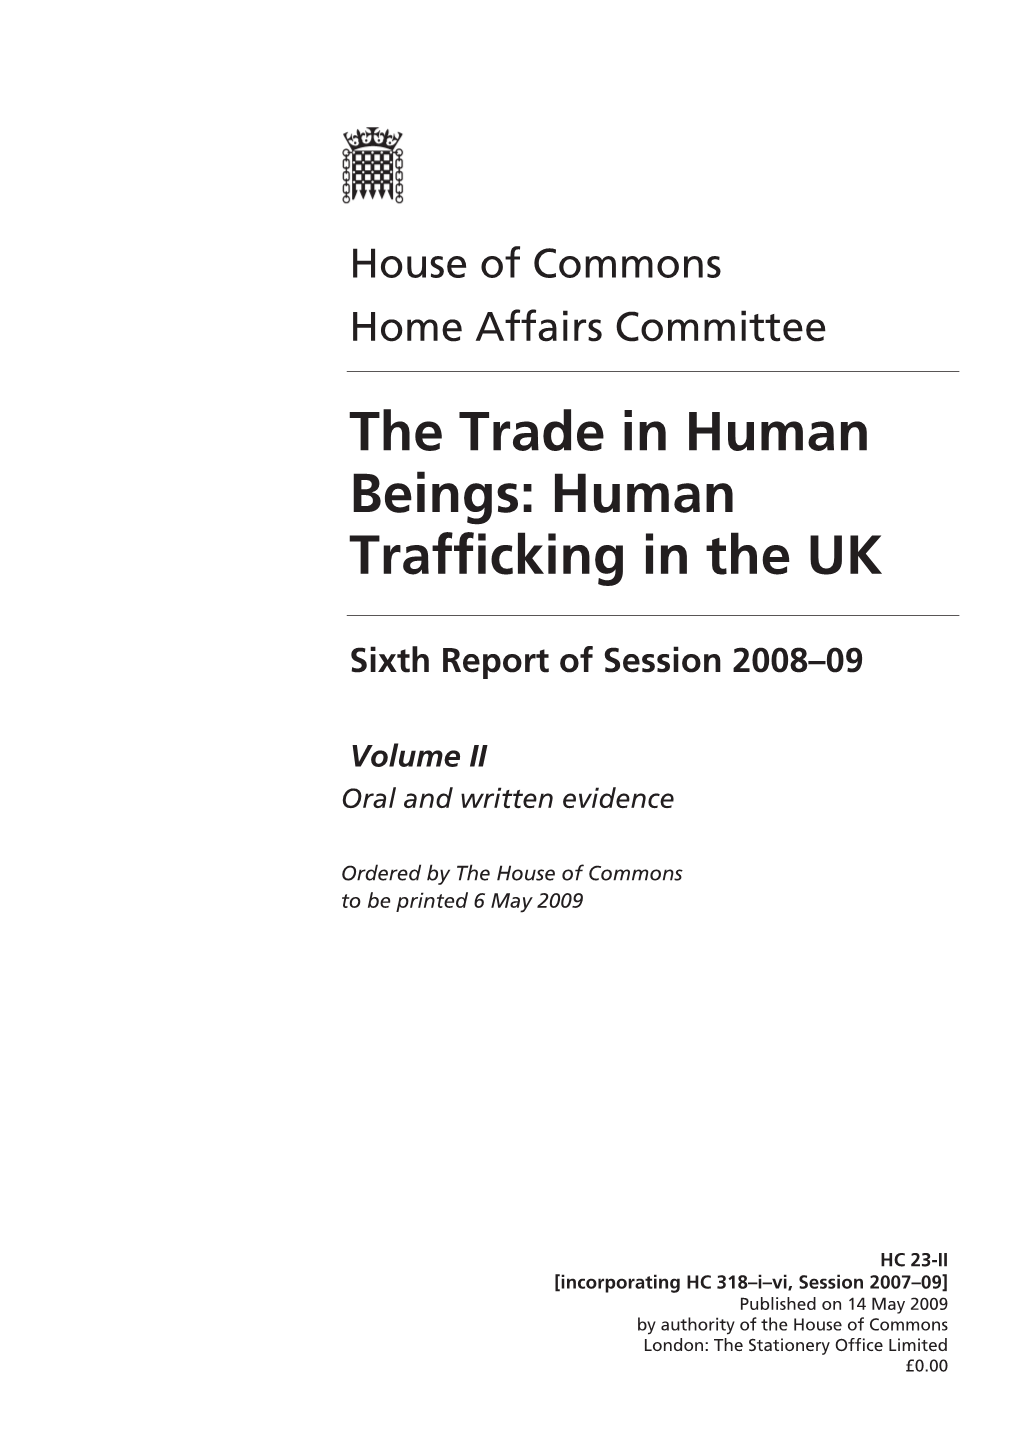 Human Trafficking in the UK